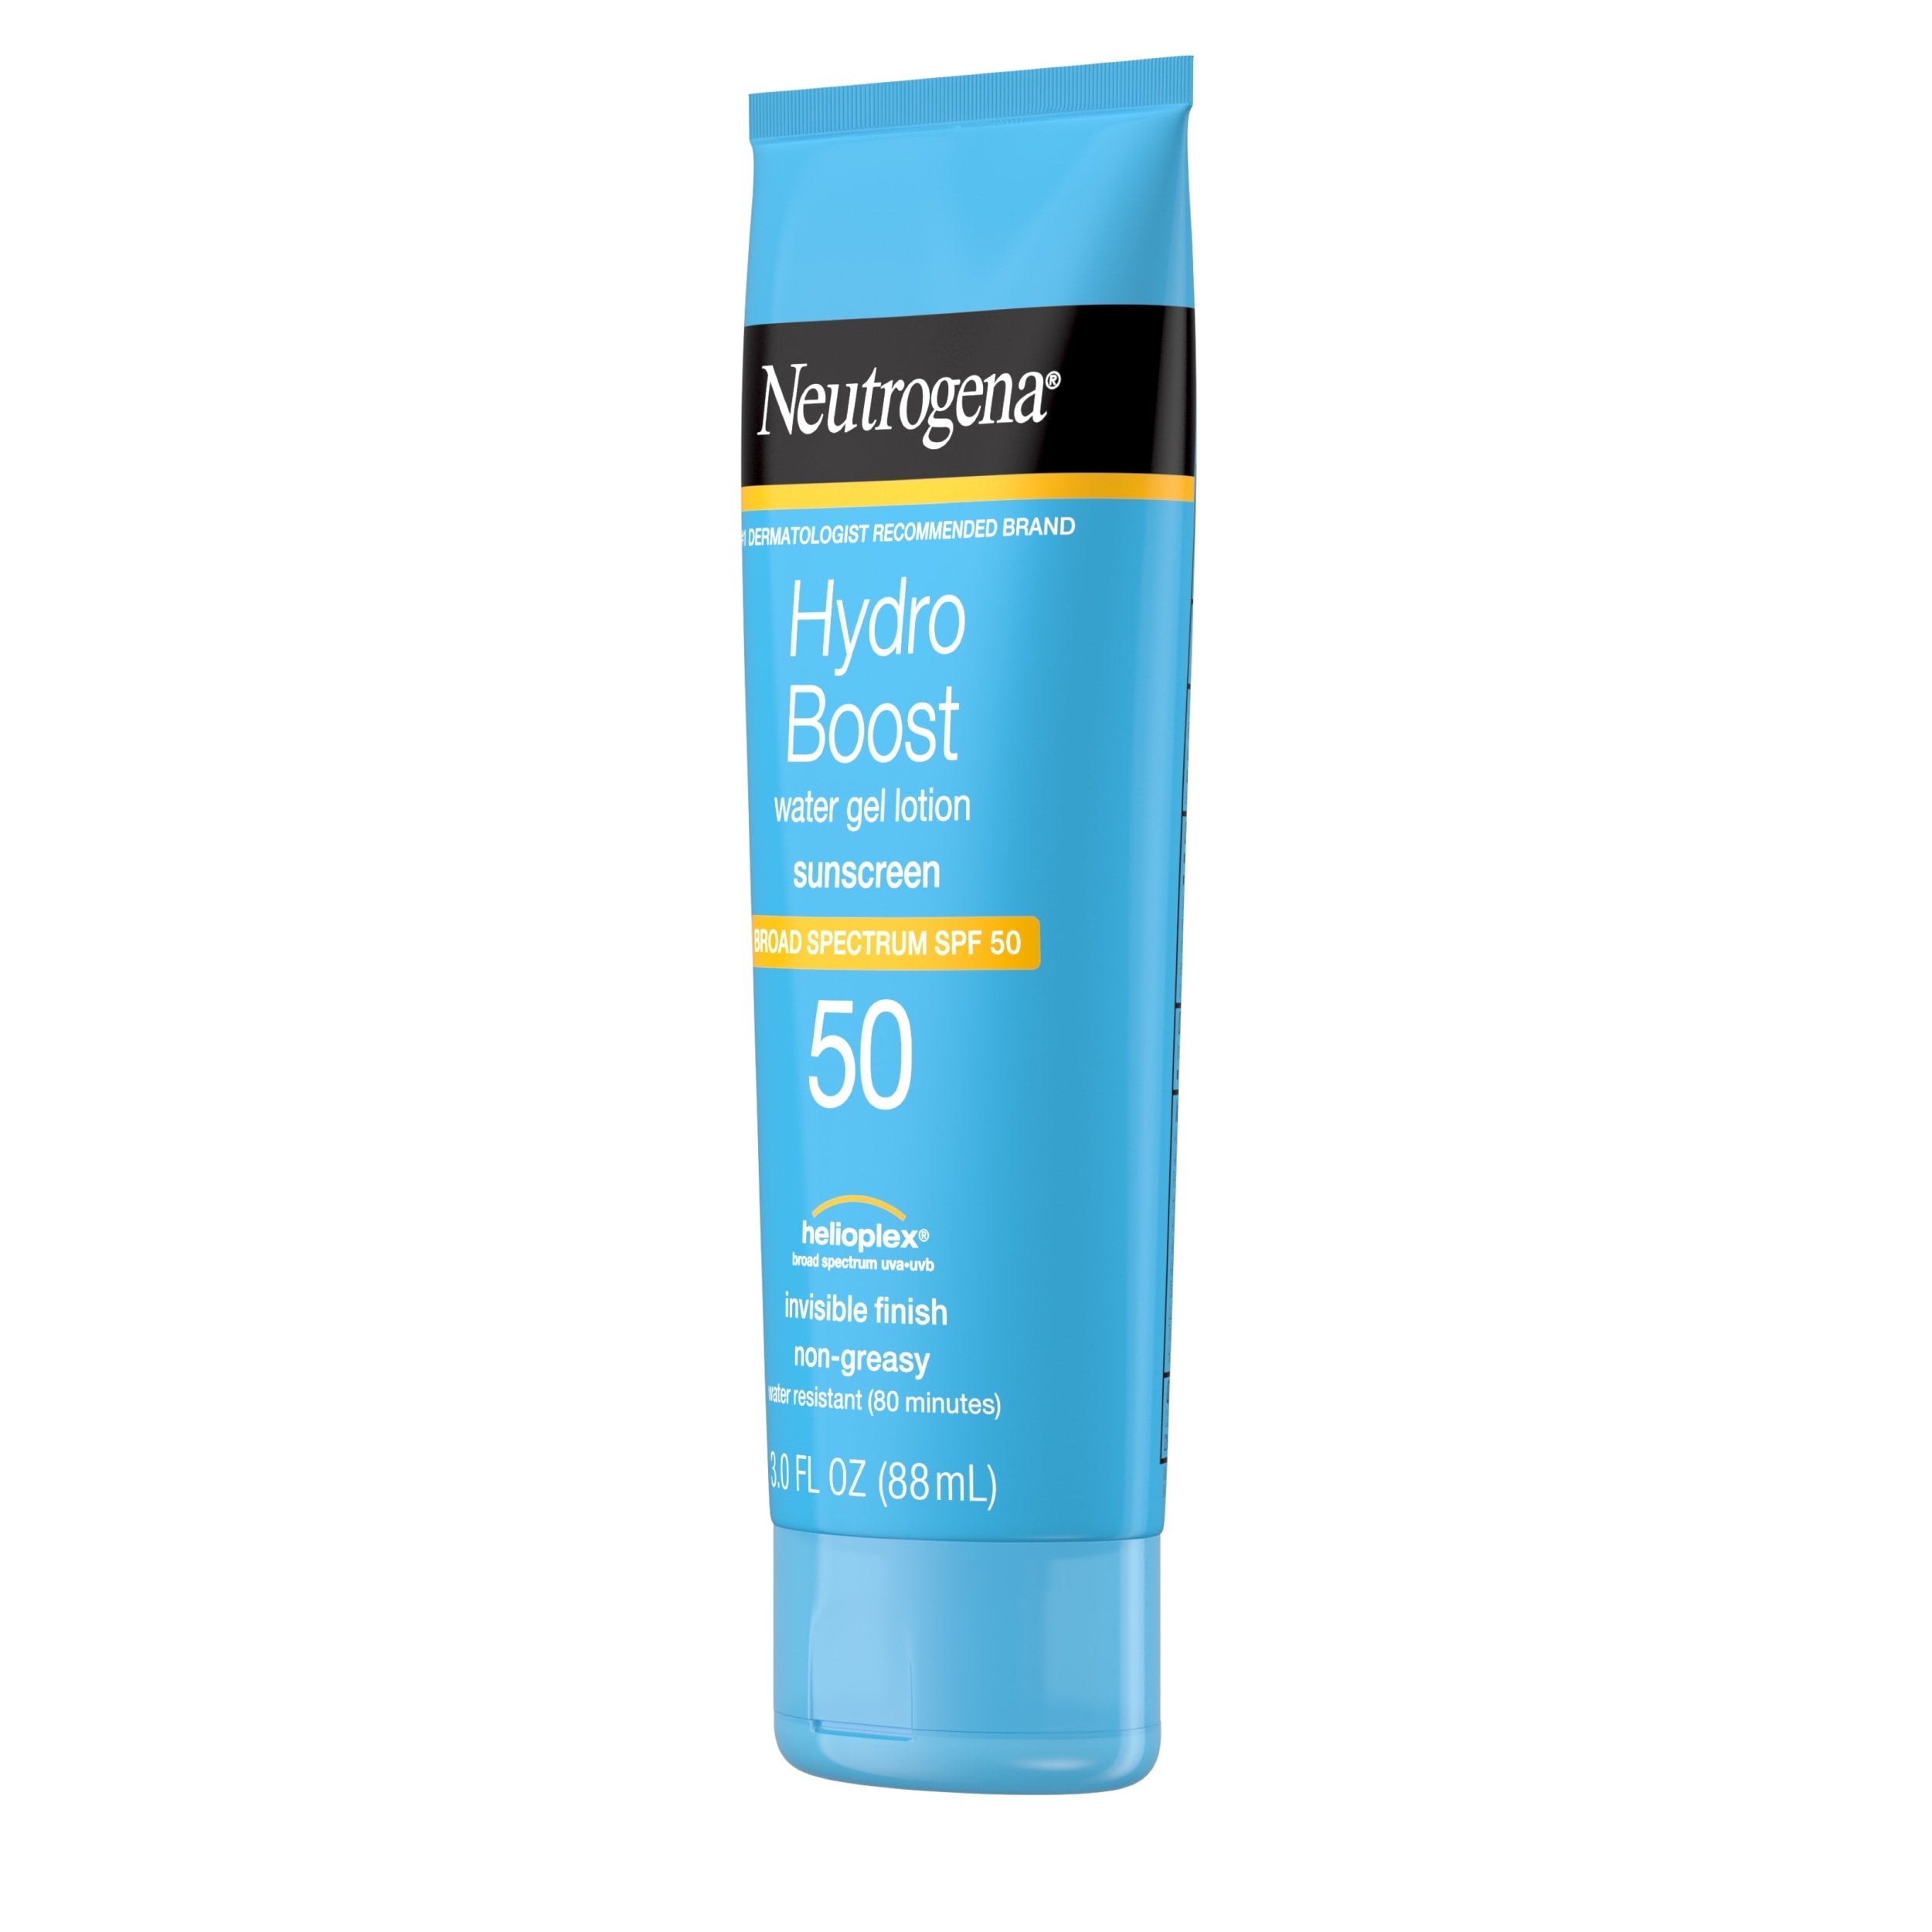 Neutrogena Hydro Boost Gel Moisturizing Sunscreen Lotion, SPF 50, 3 fl. oz